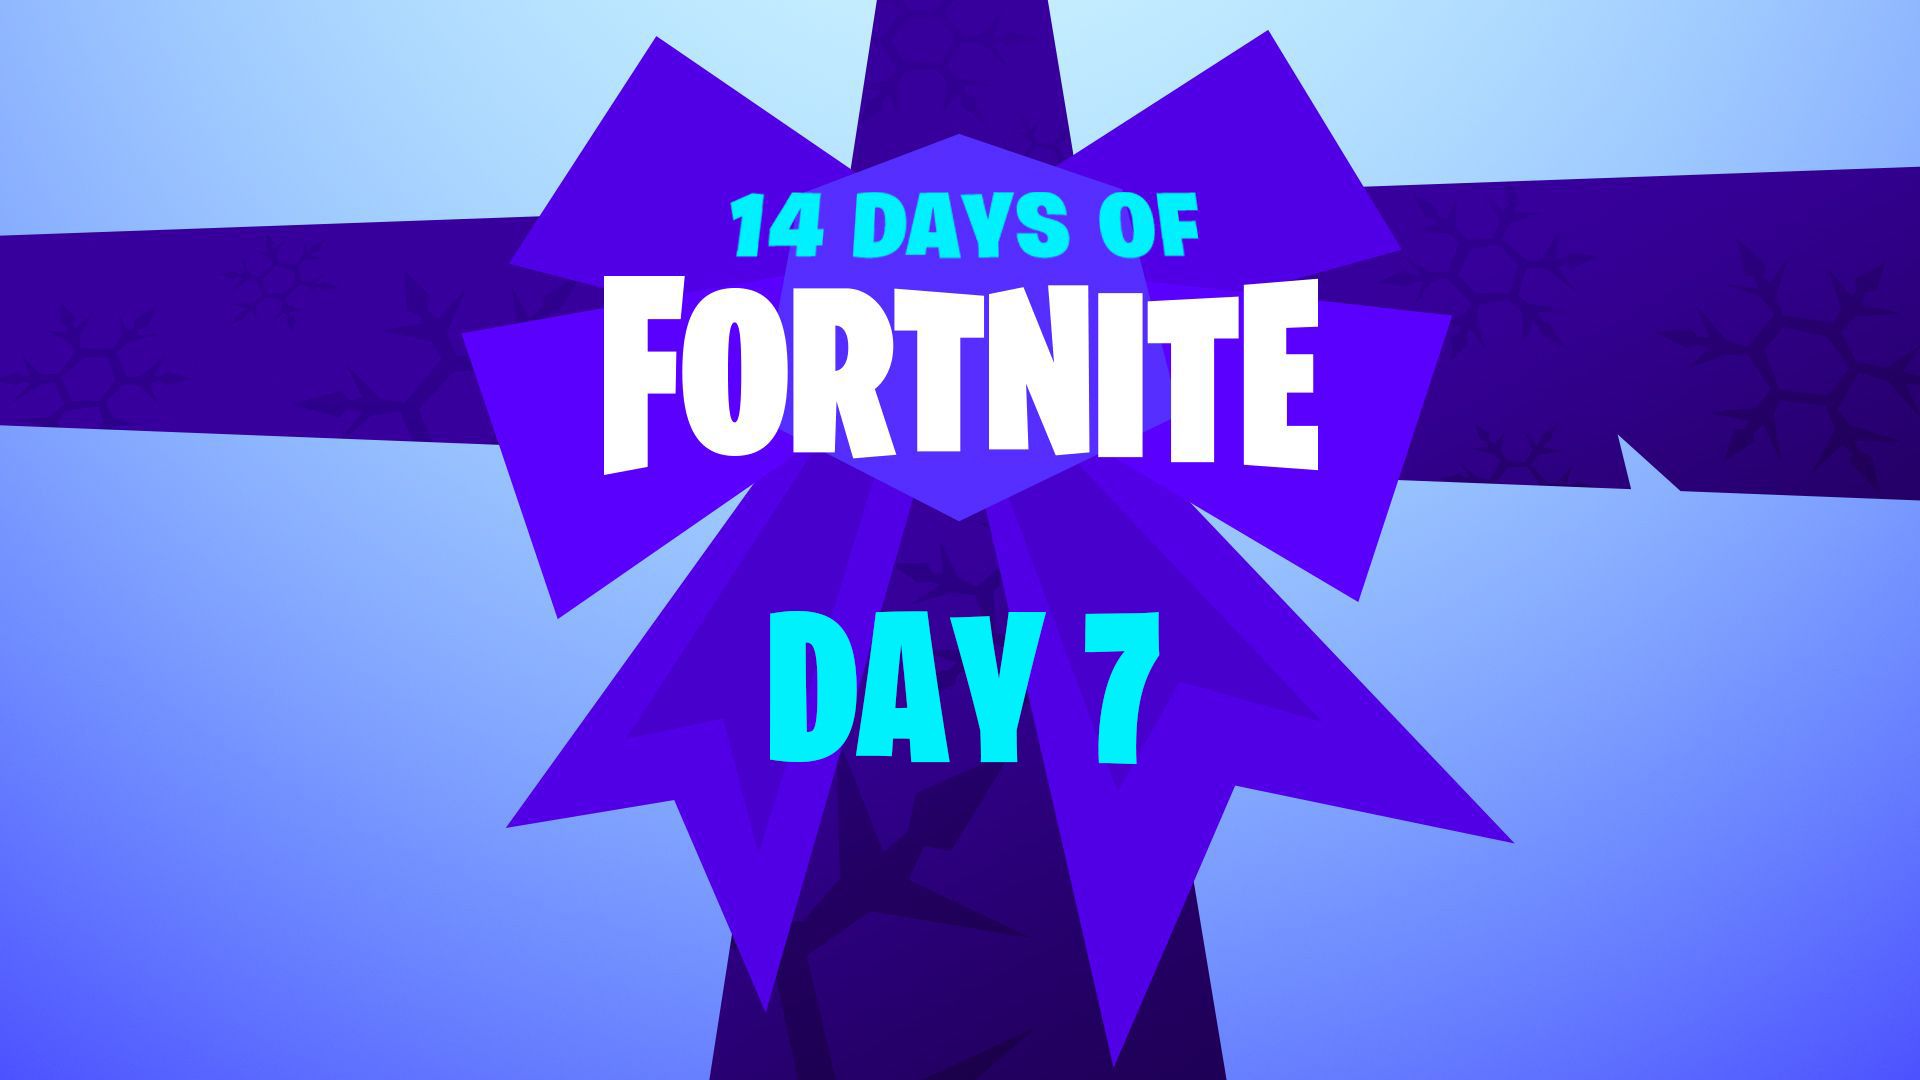 14 Days of Fortnite - Day 7 challenge & reward